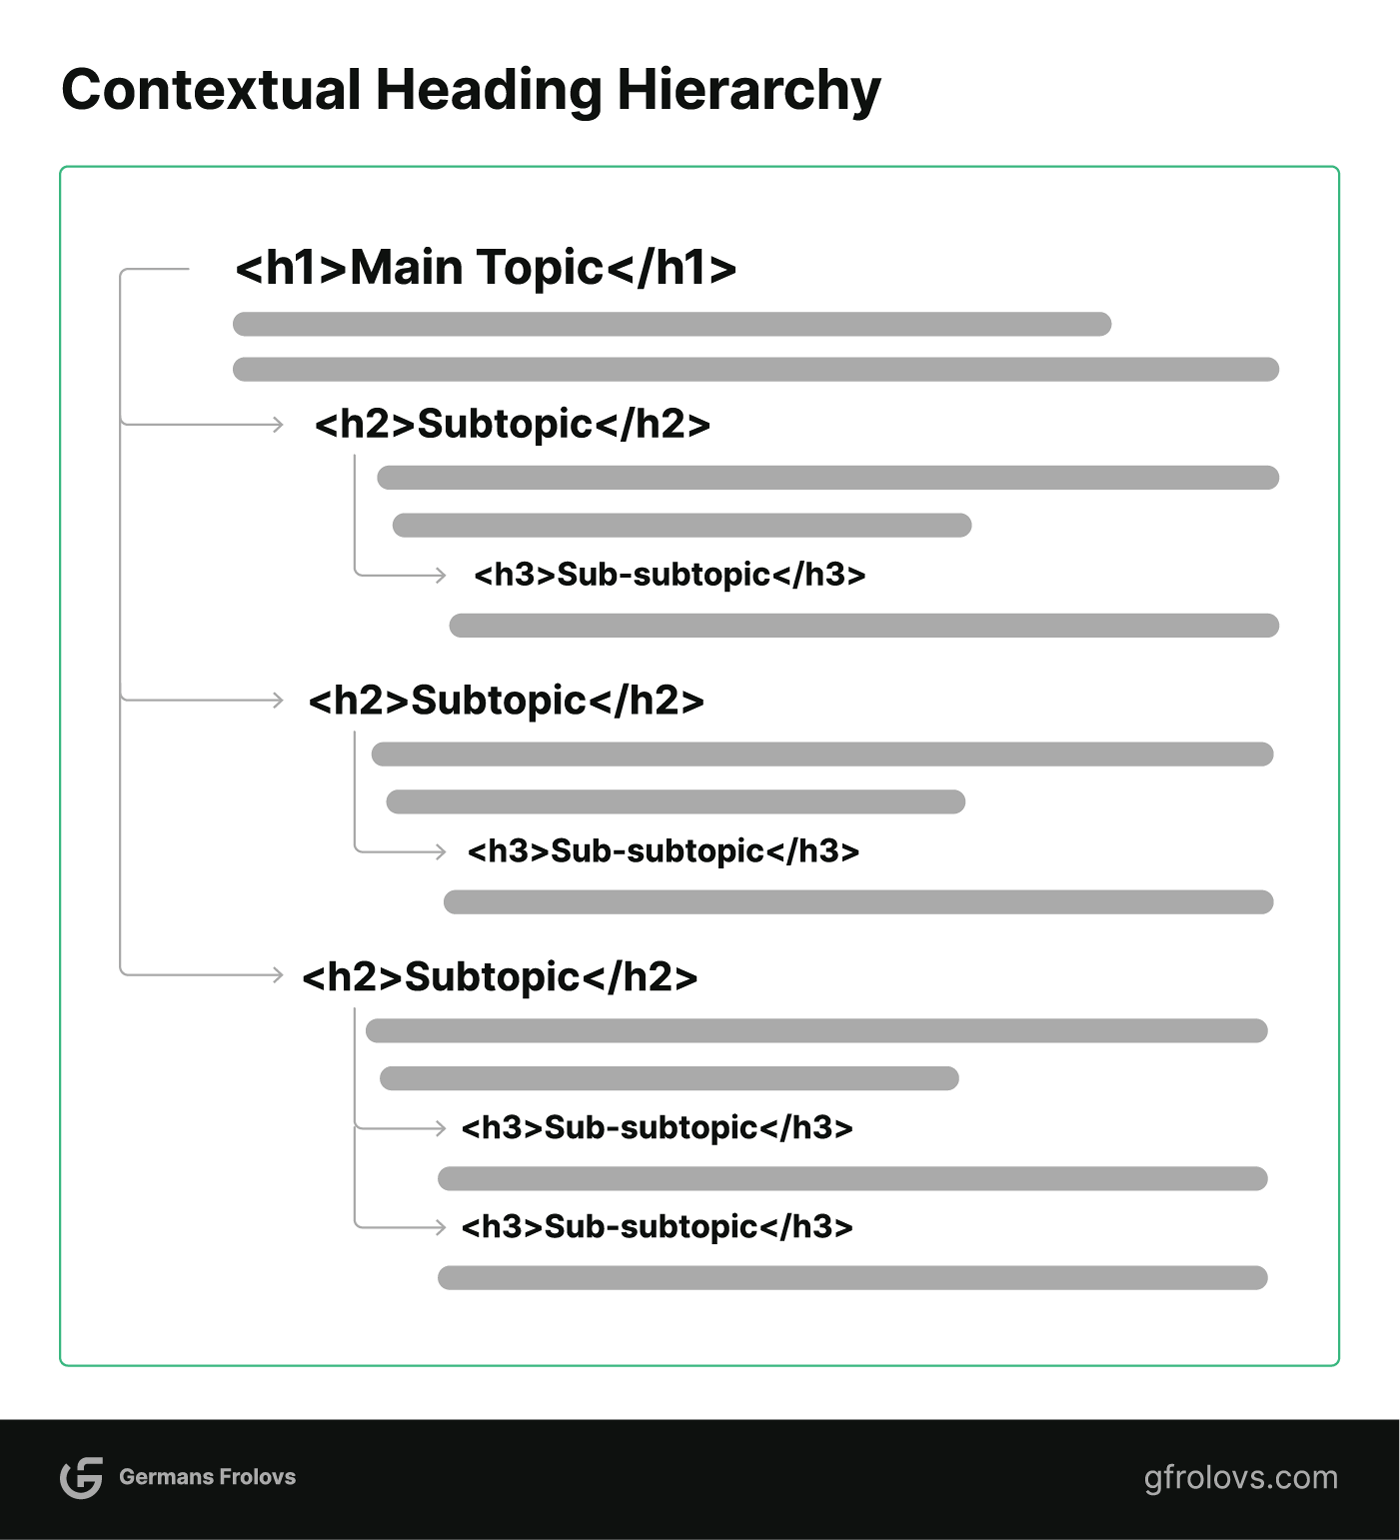 Contextual heading hierarchy